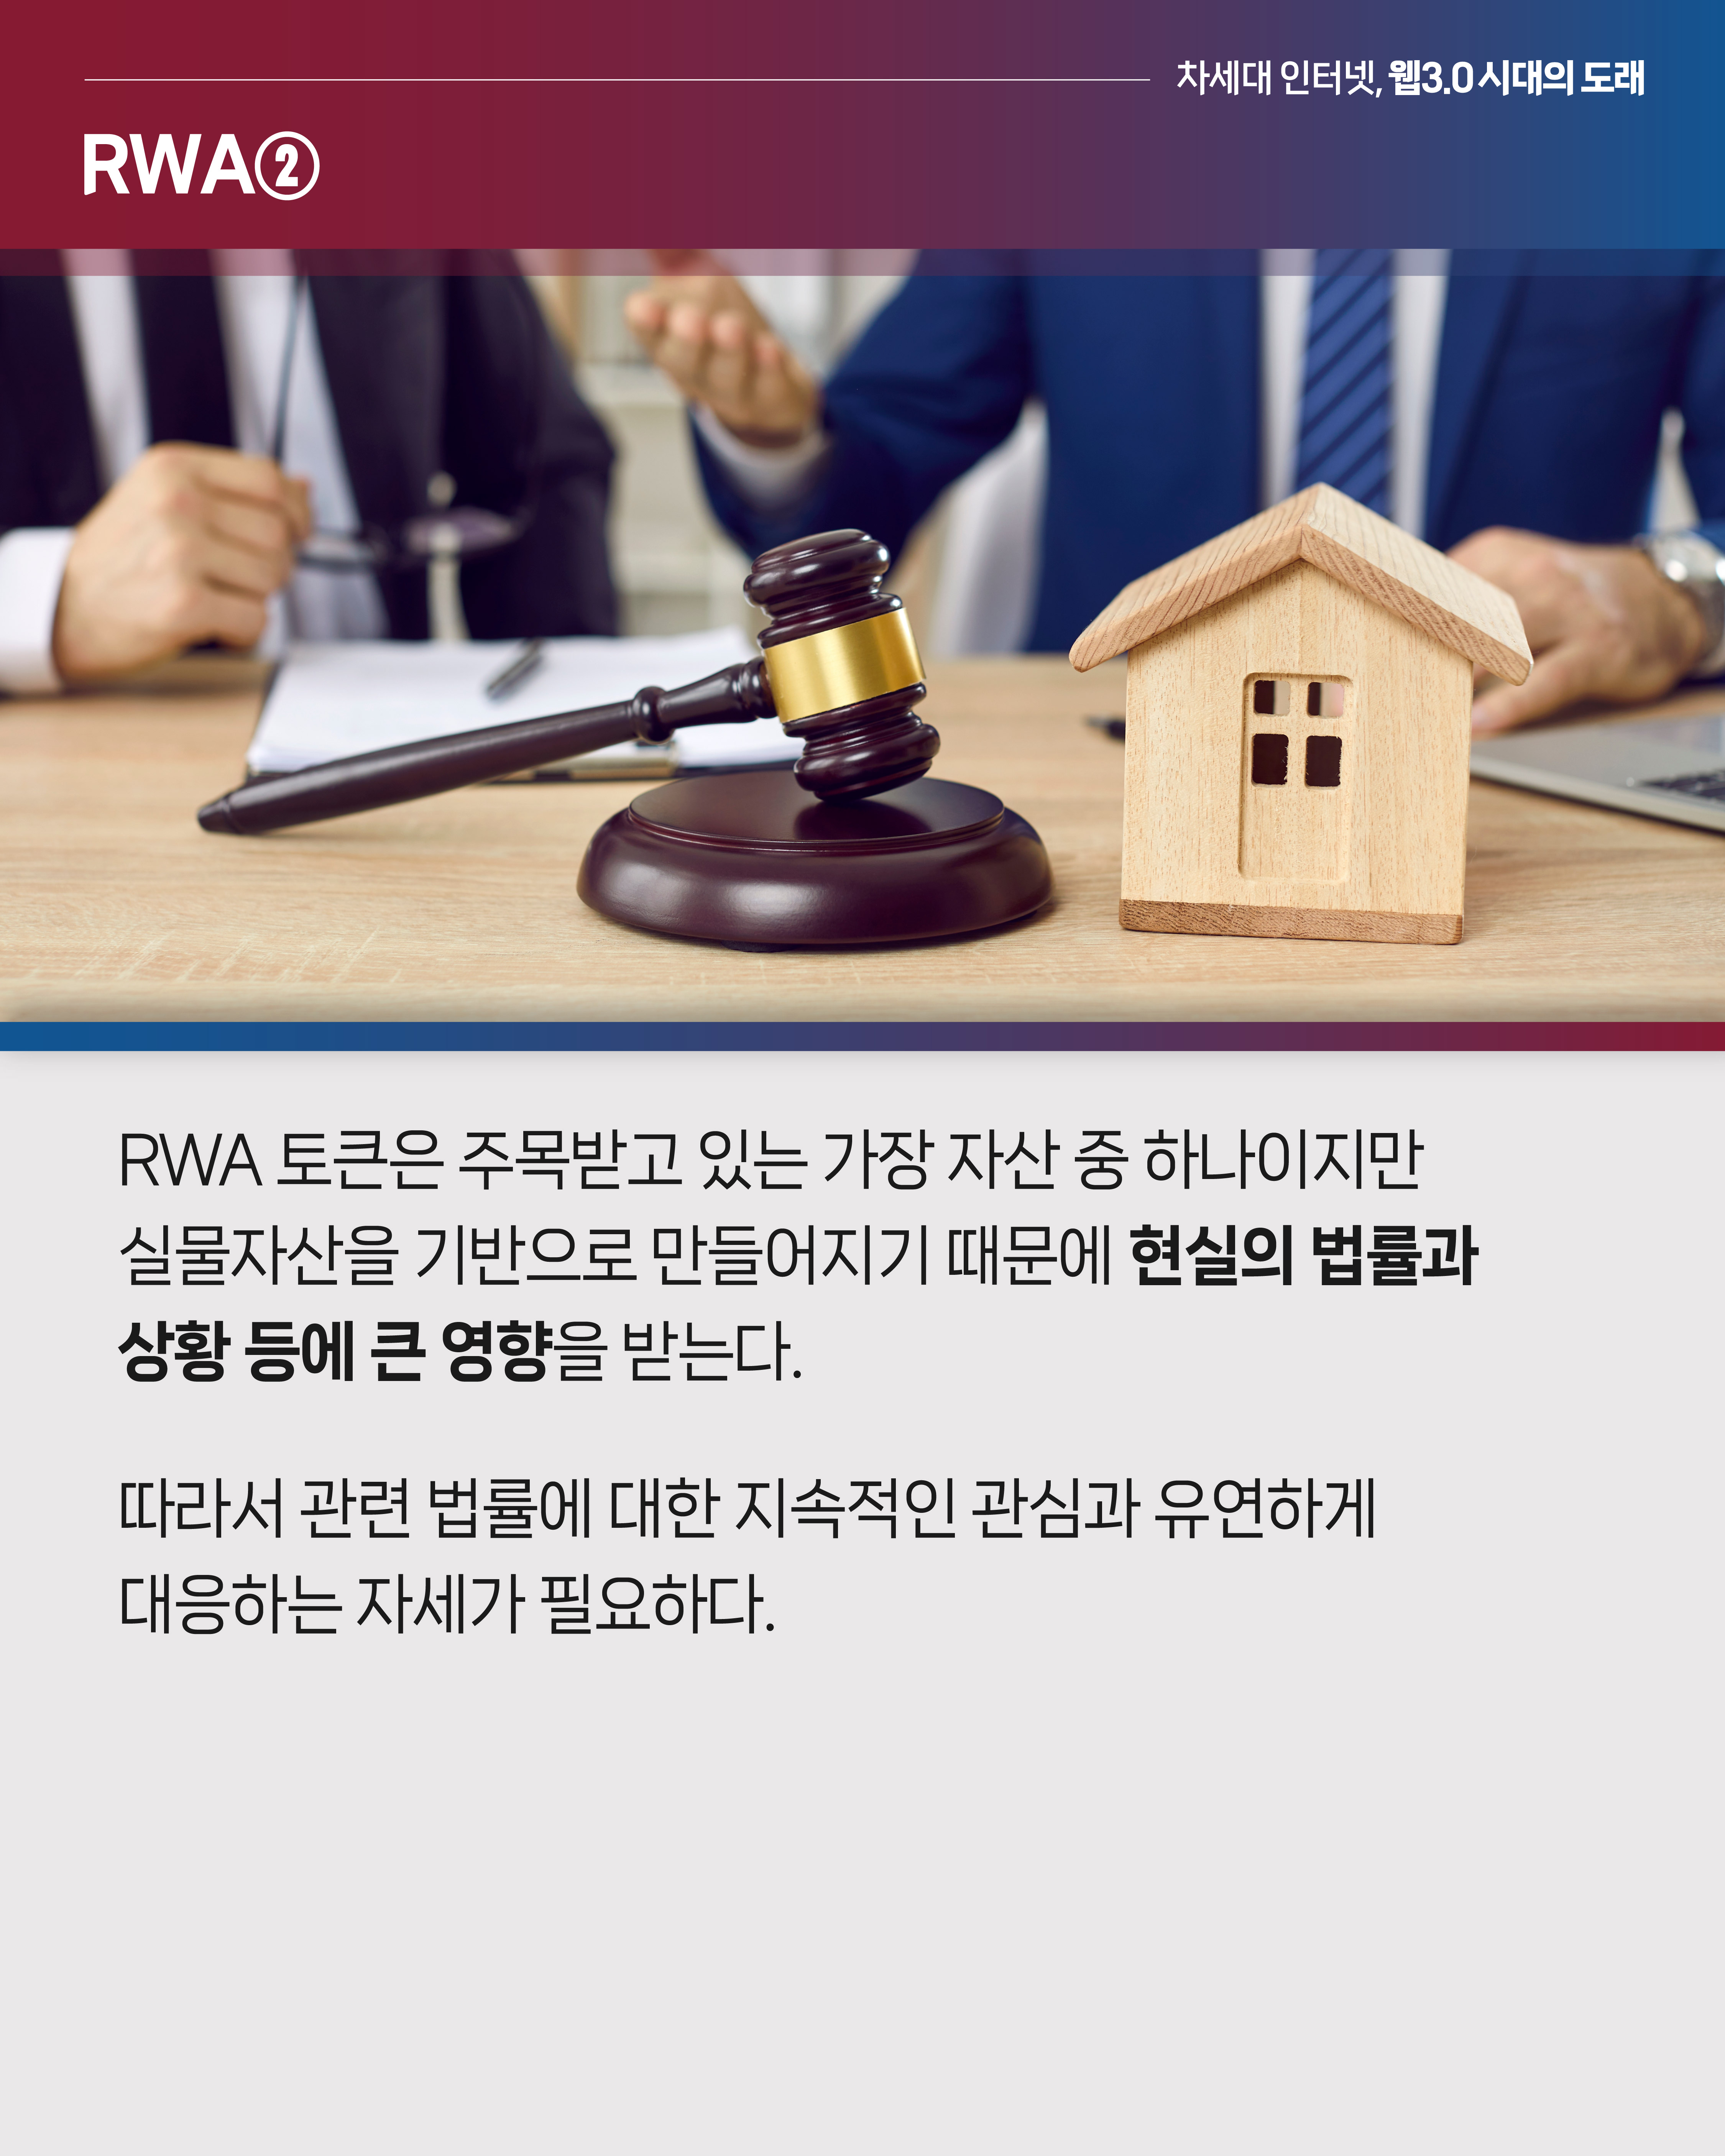 <RWA>

RWA 토큰은 주목받고 있는 가장 자산 중 하나이지만 실물자산을 기반으로 만들어지기 때문에 현실의 법률과 상황 등에 큰 영향을 받는다. 
따라서 관련 법률에 대한 지속적인 관심과 유연하게 대응하는 자세가 필요하다.
